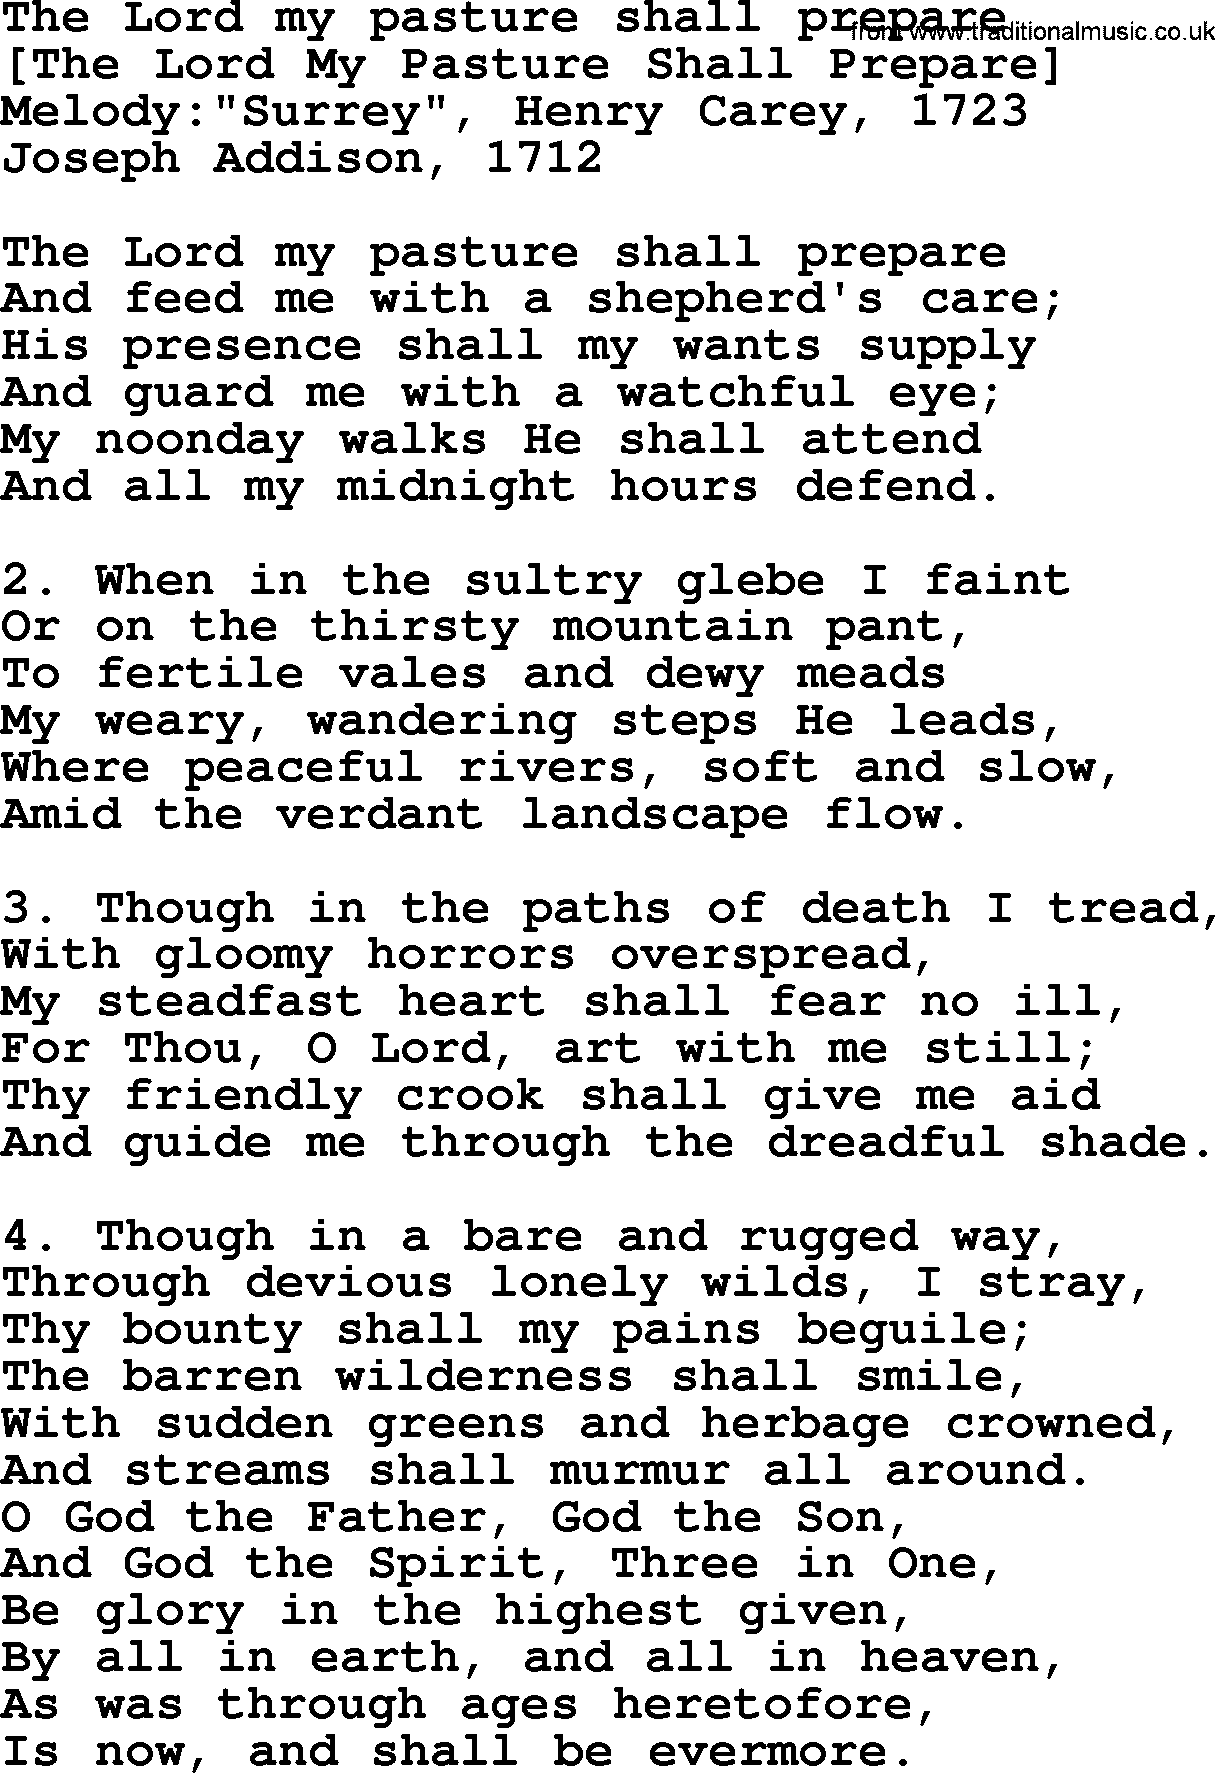 Old English Song: The Lord My Pasture Shall Prepare lyrics